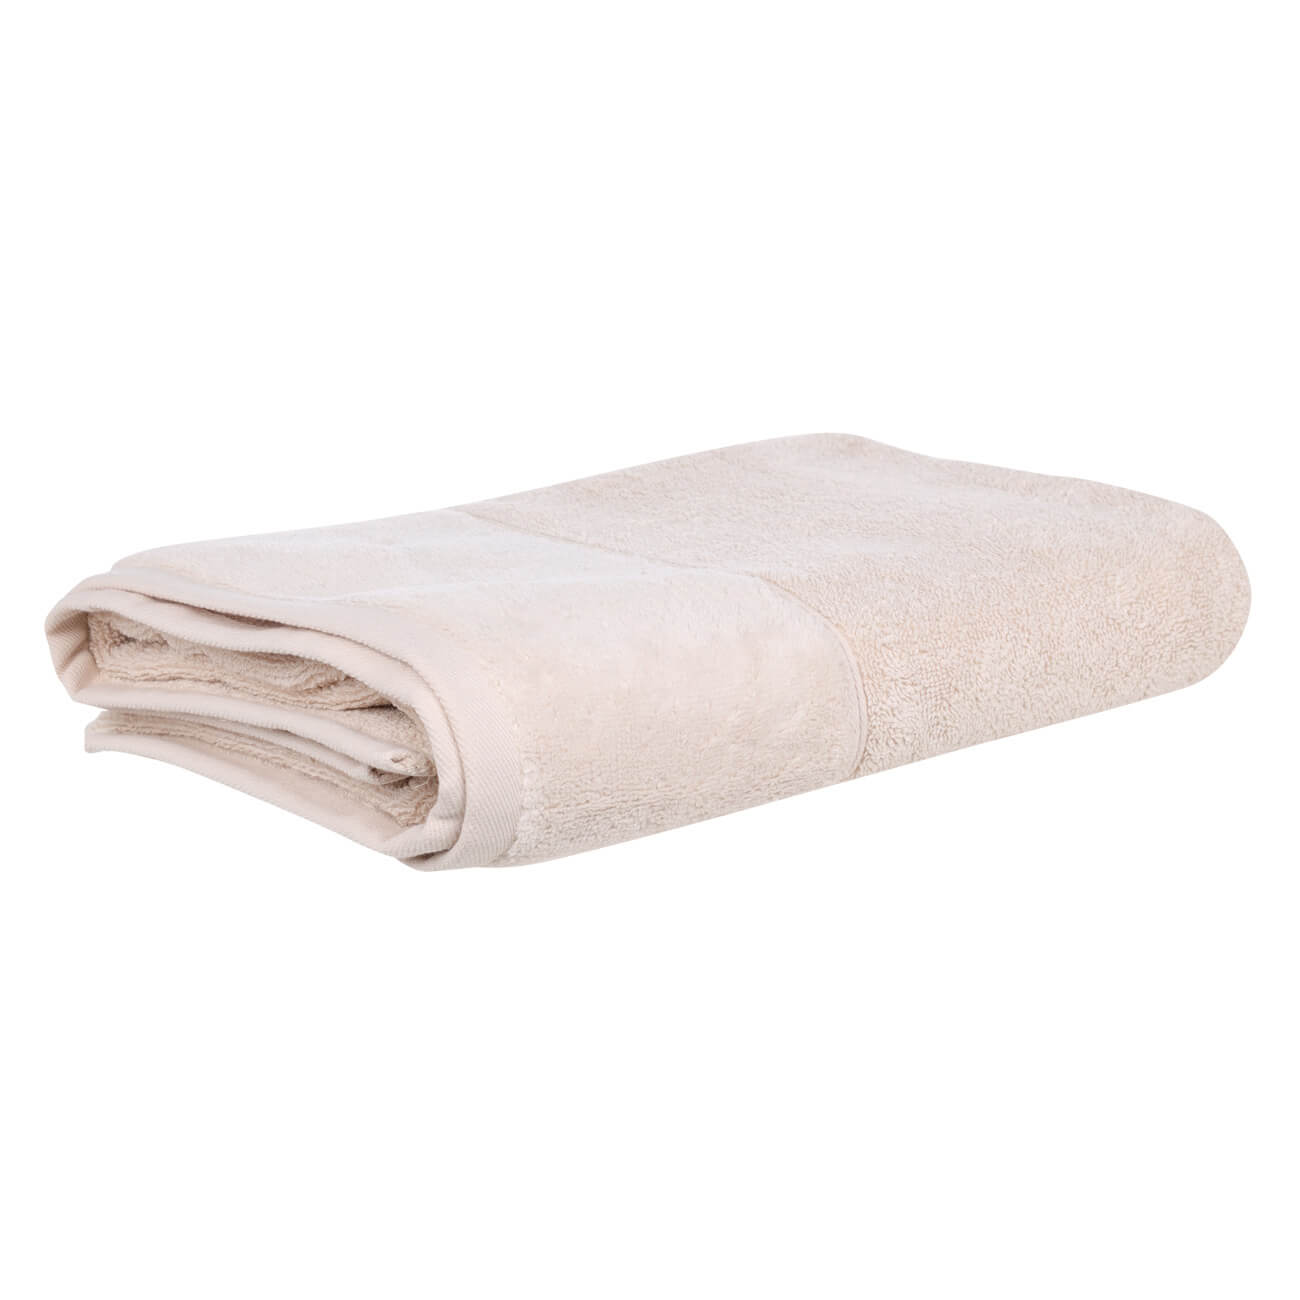 Полотенце, 70х140 см, хлопок, бежевое, Velvet touch полотенце утро антрацит р 70х140